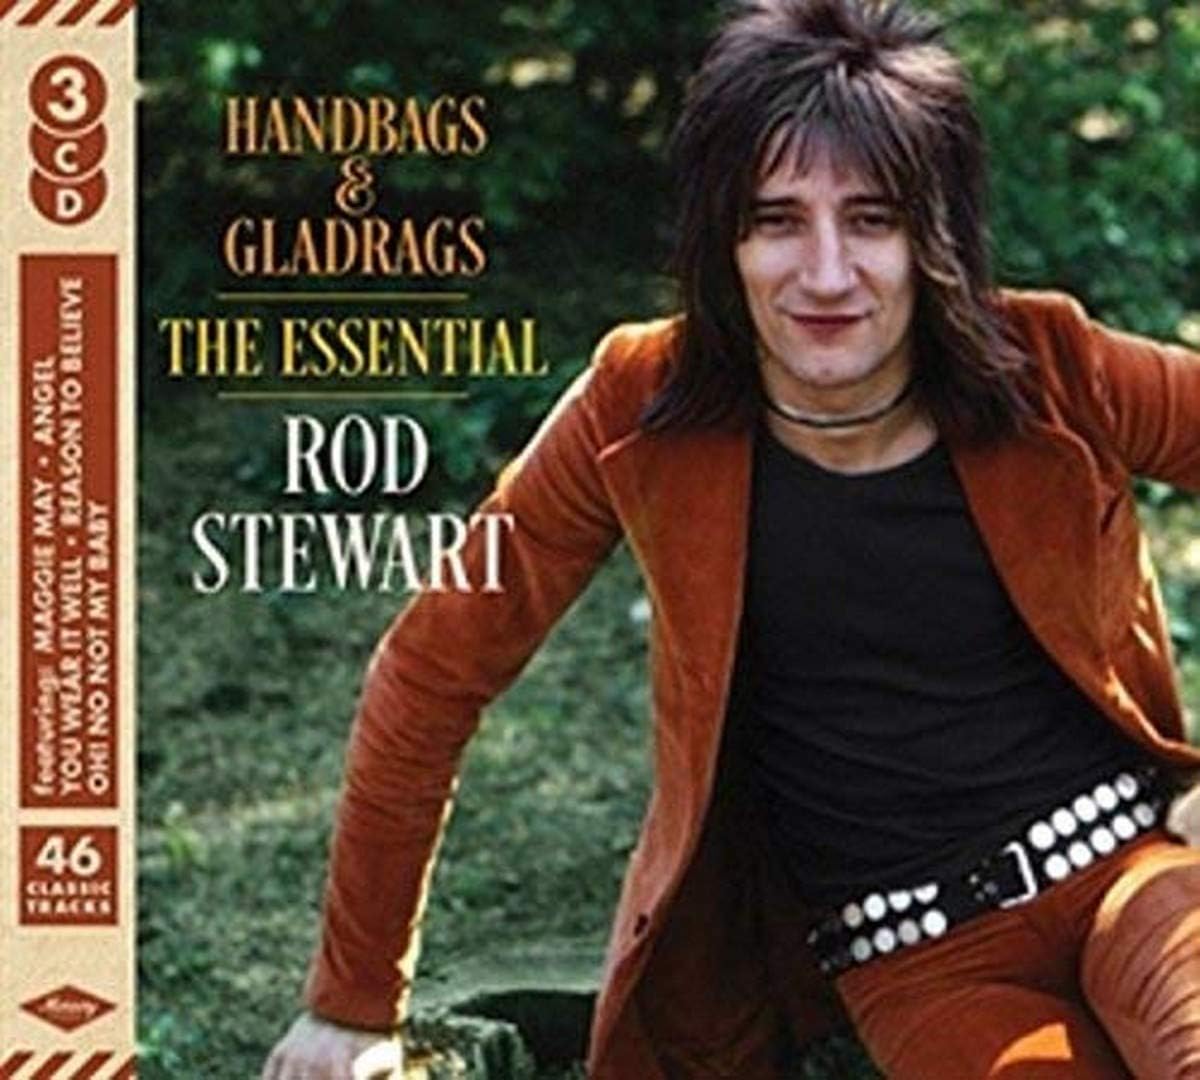 Rod Stewart - Handbags & Gladrags - Essential Collection - 3 CD Set